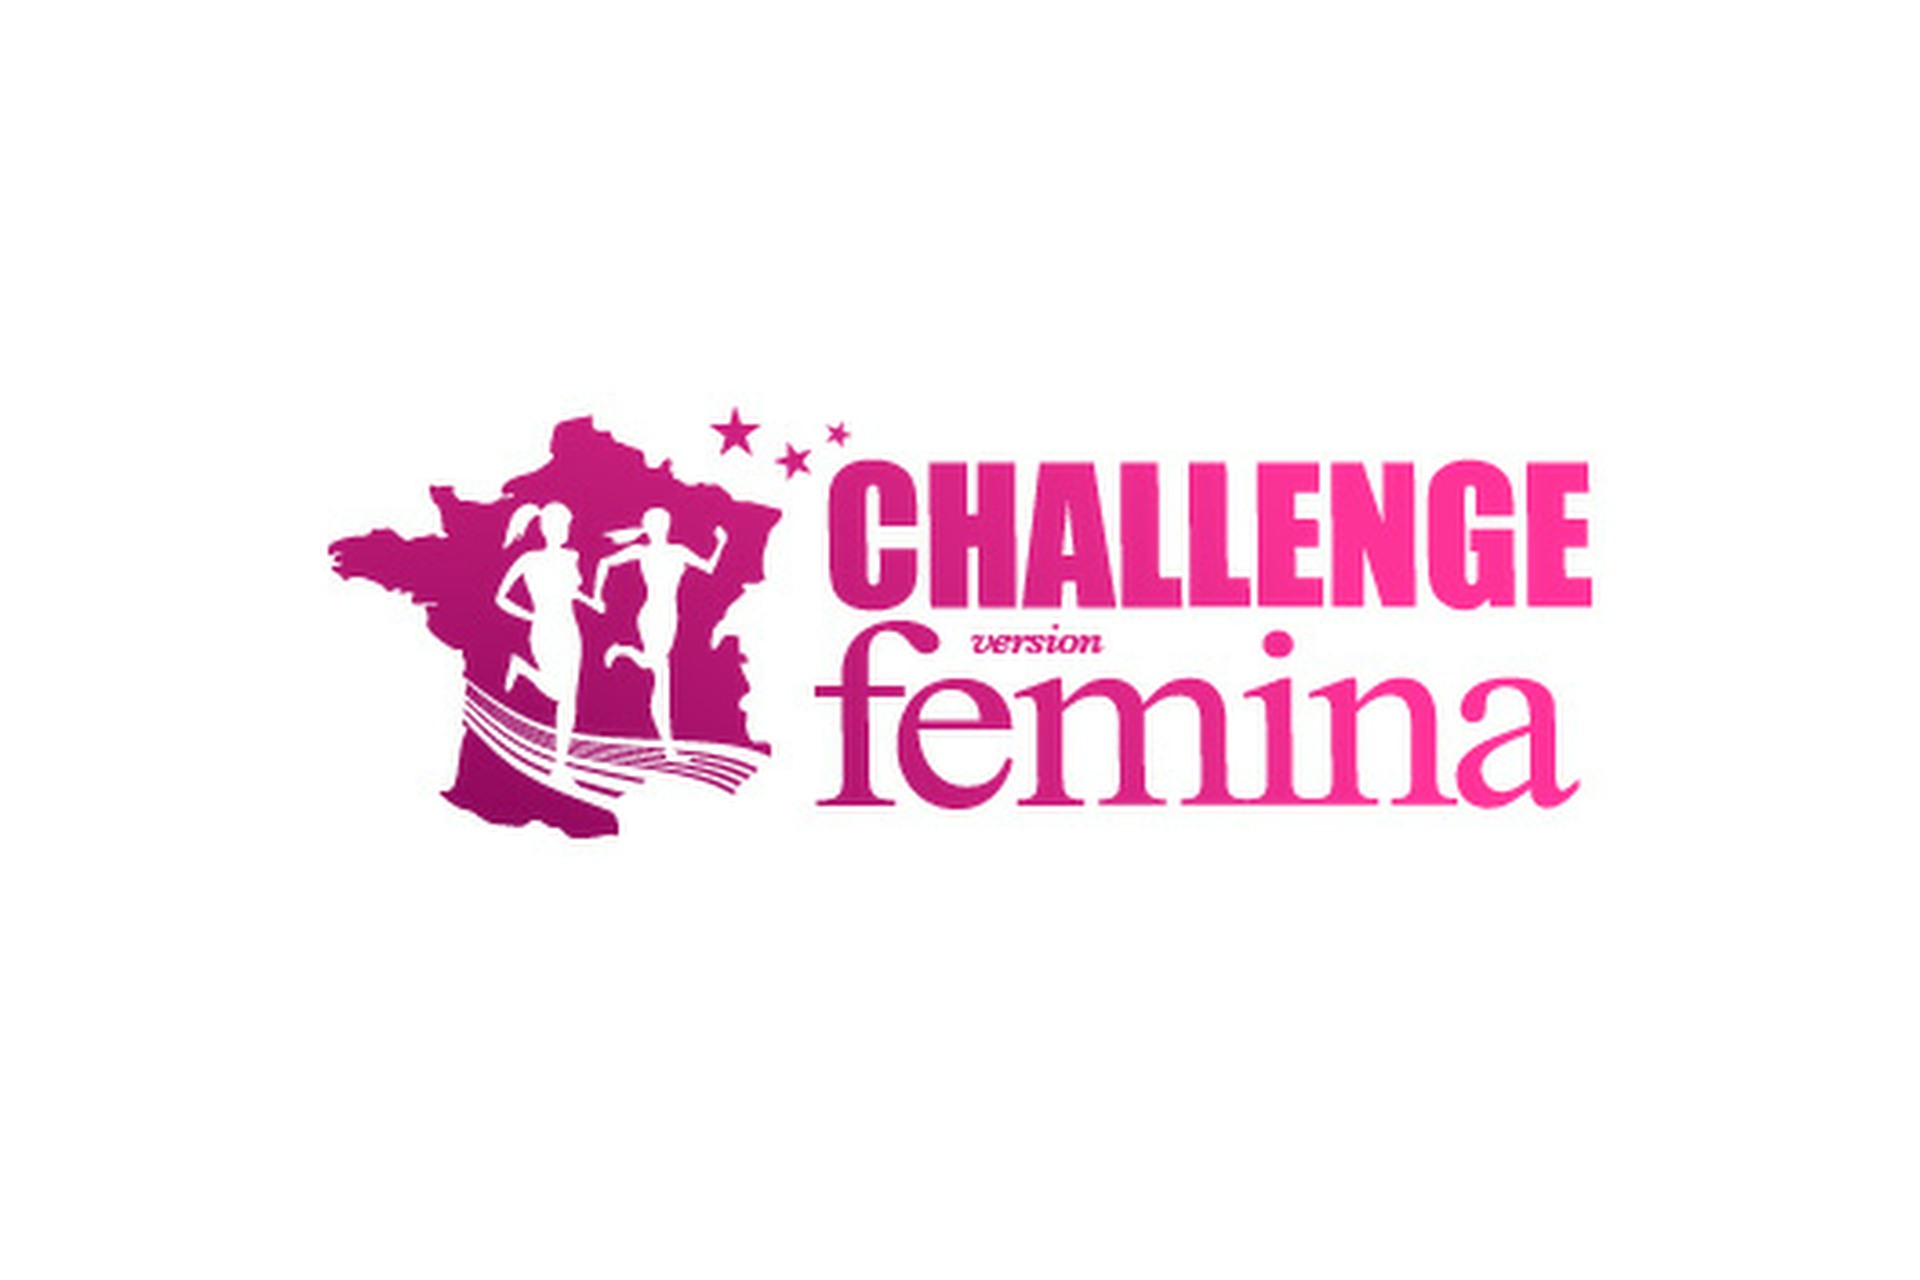 CHALLENGE VERSION FEMINA